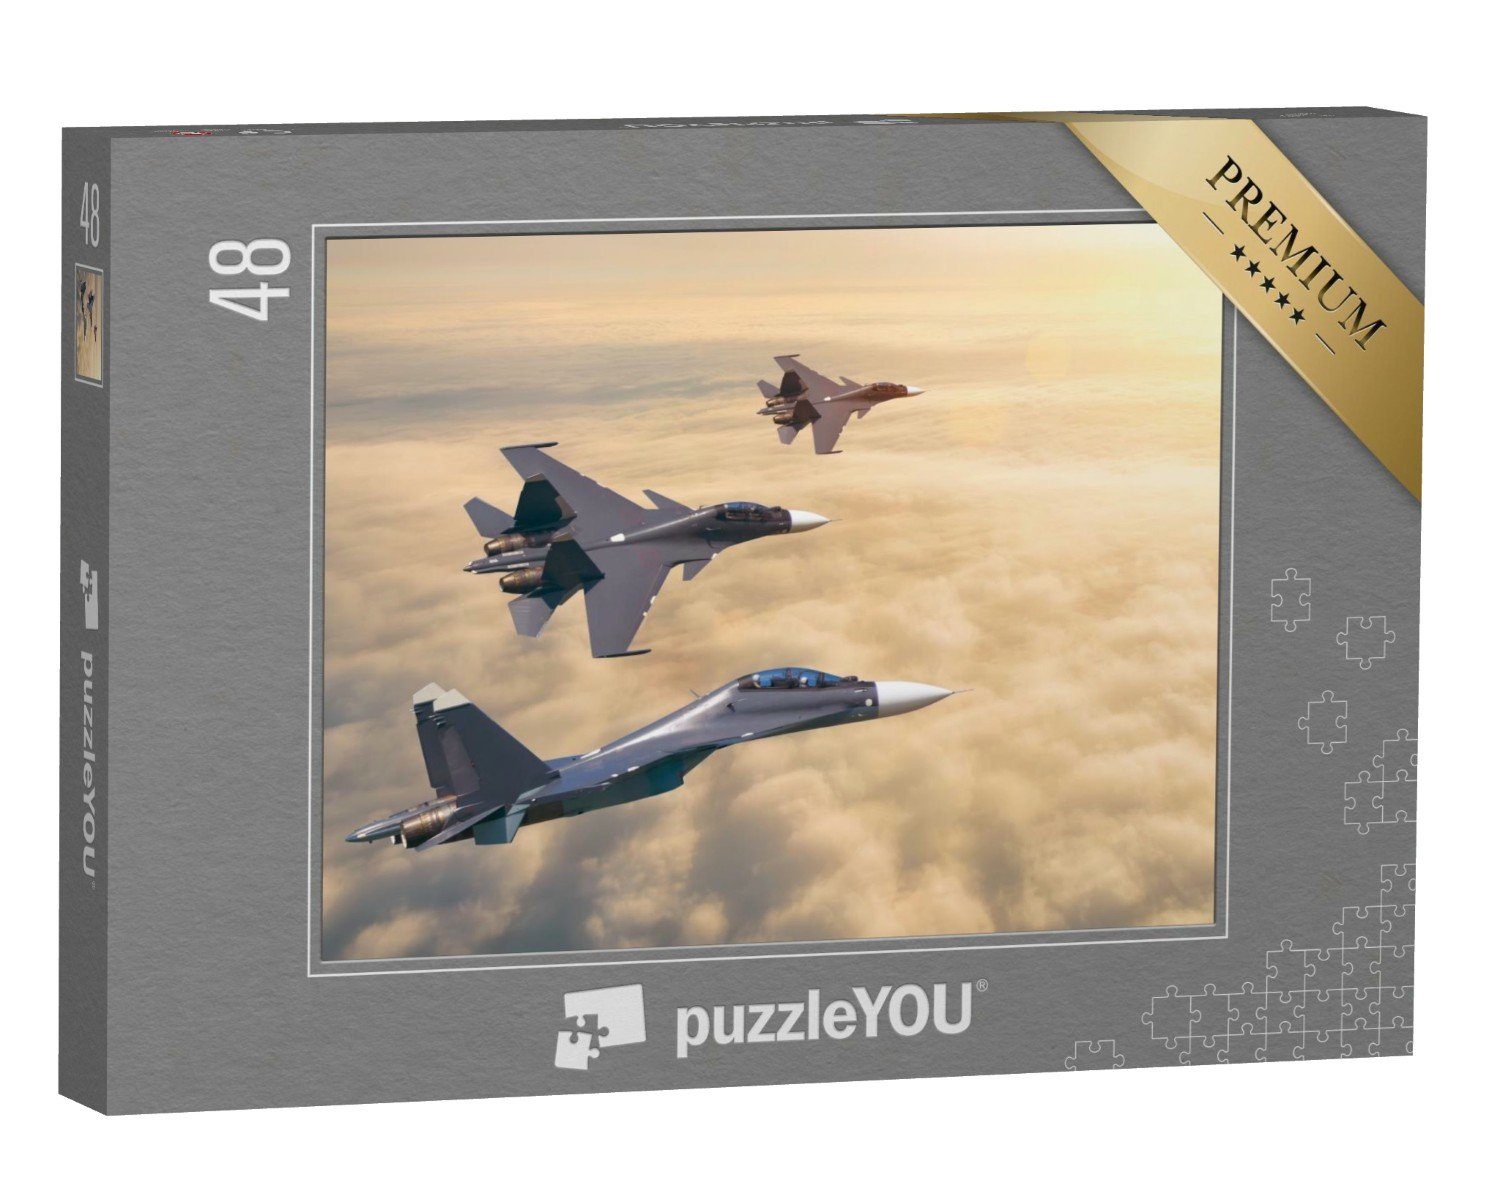 puzzleYOU Puzzle f, 48 Puzzleteile, puzzleYOU-Kollektionen Flugzeuge